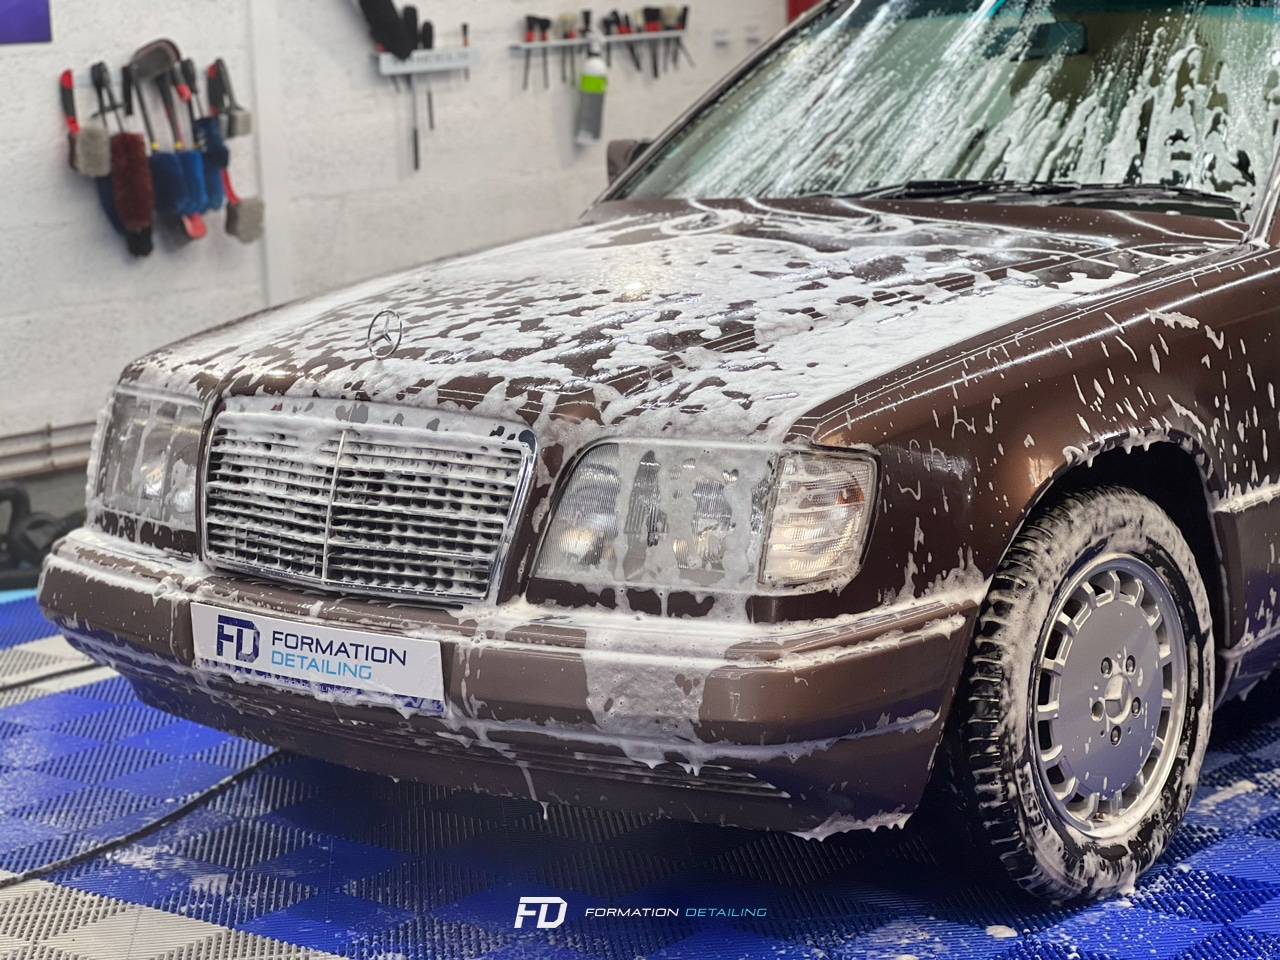 lavage voiture